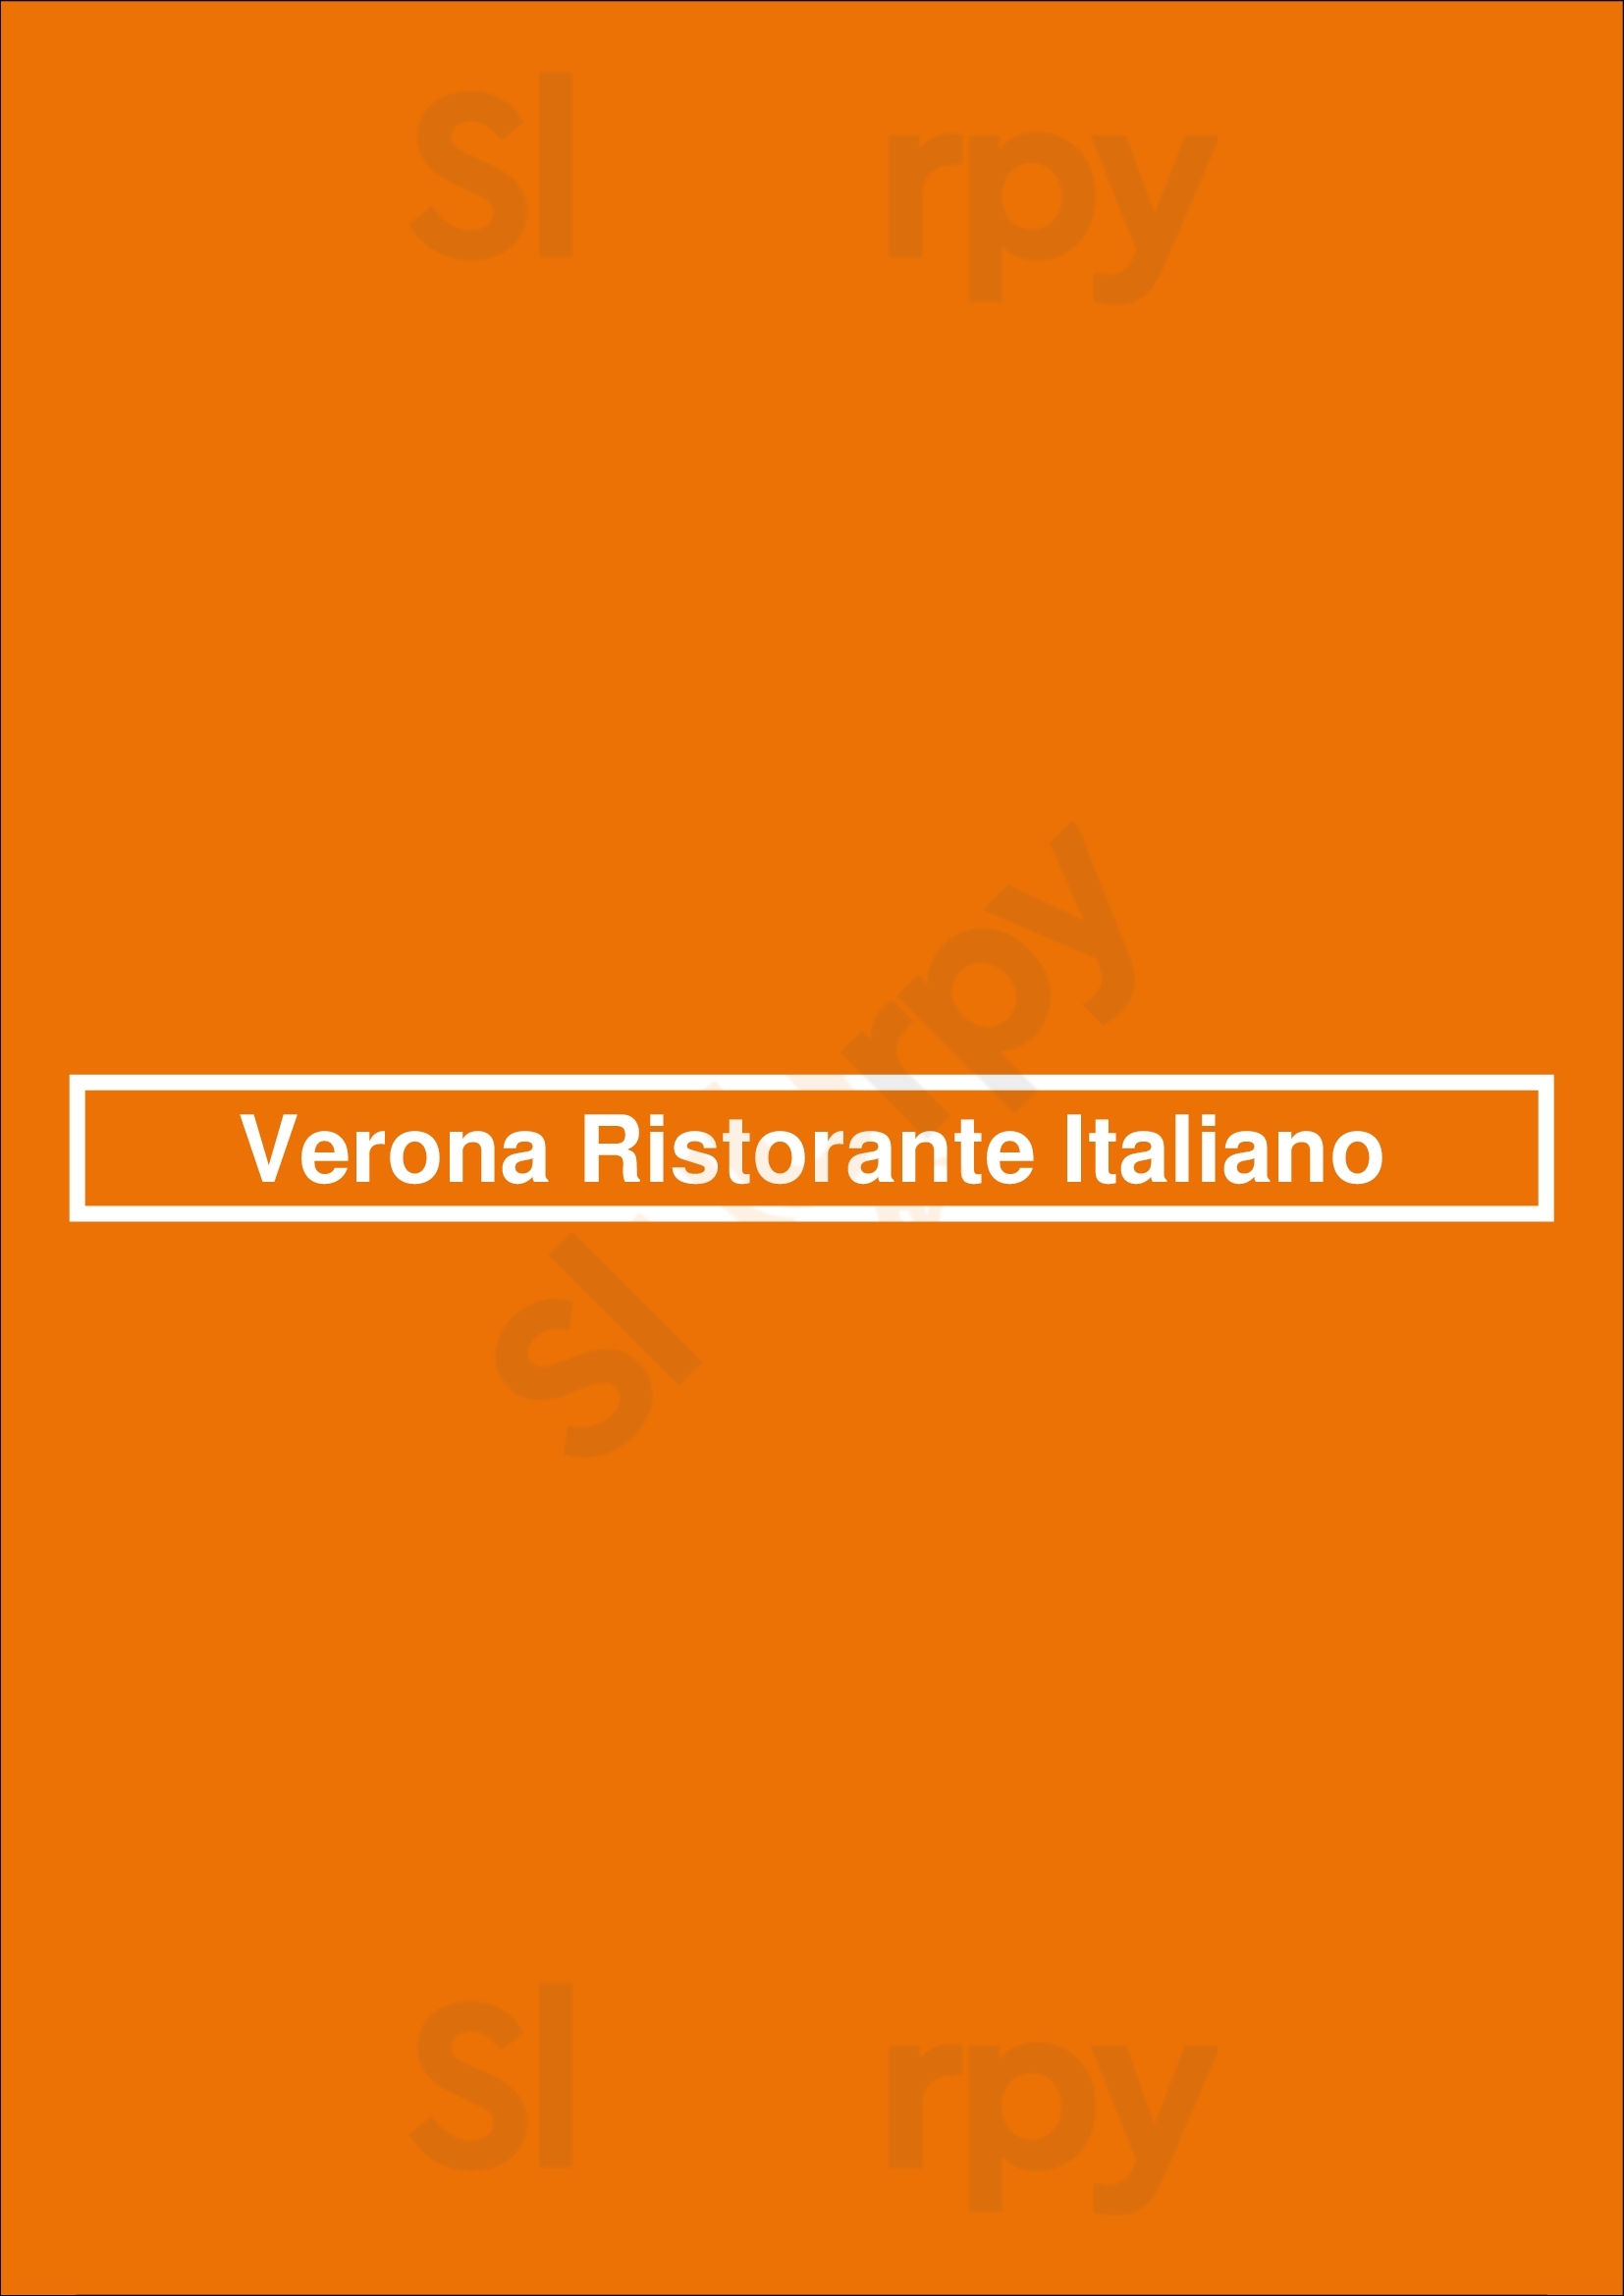 Verona Ristorante Italiano Amsterdam Menu - 1